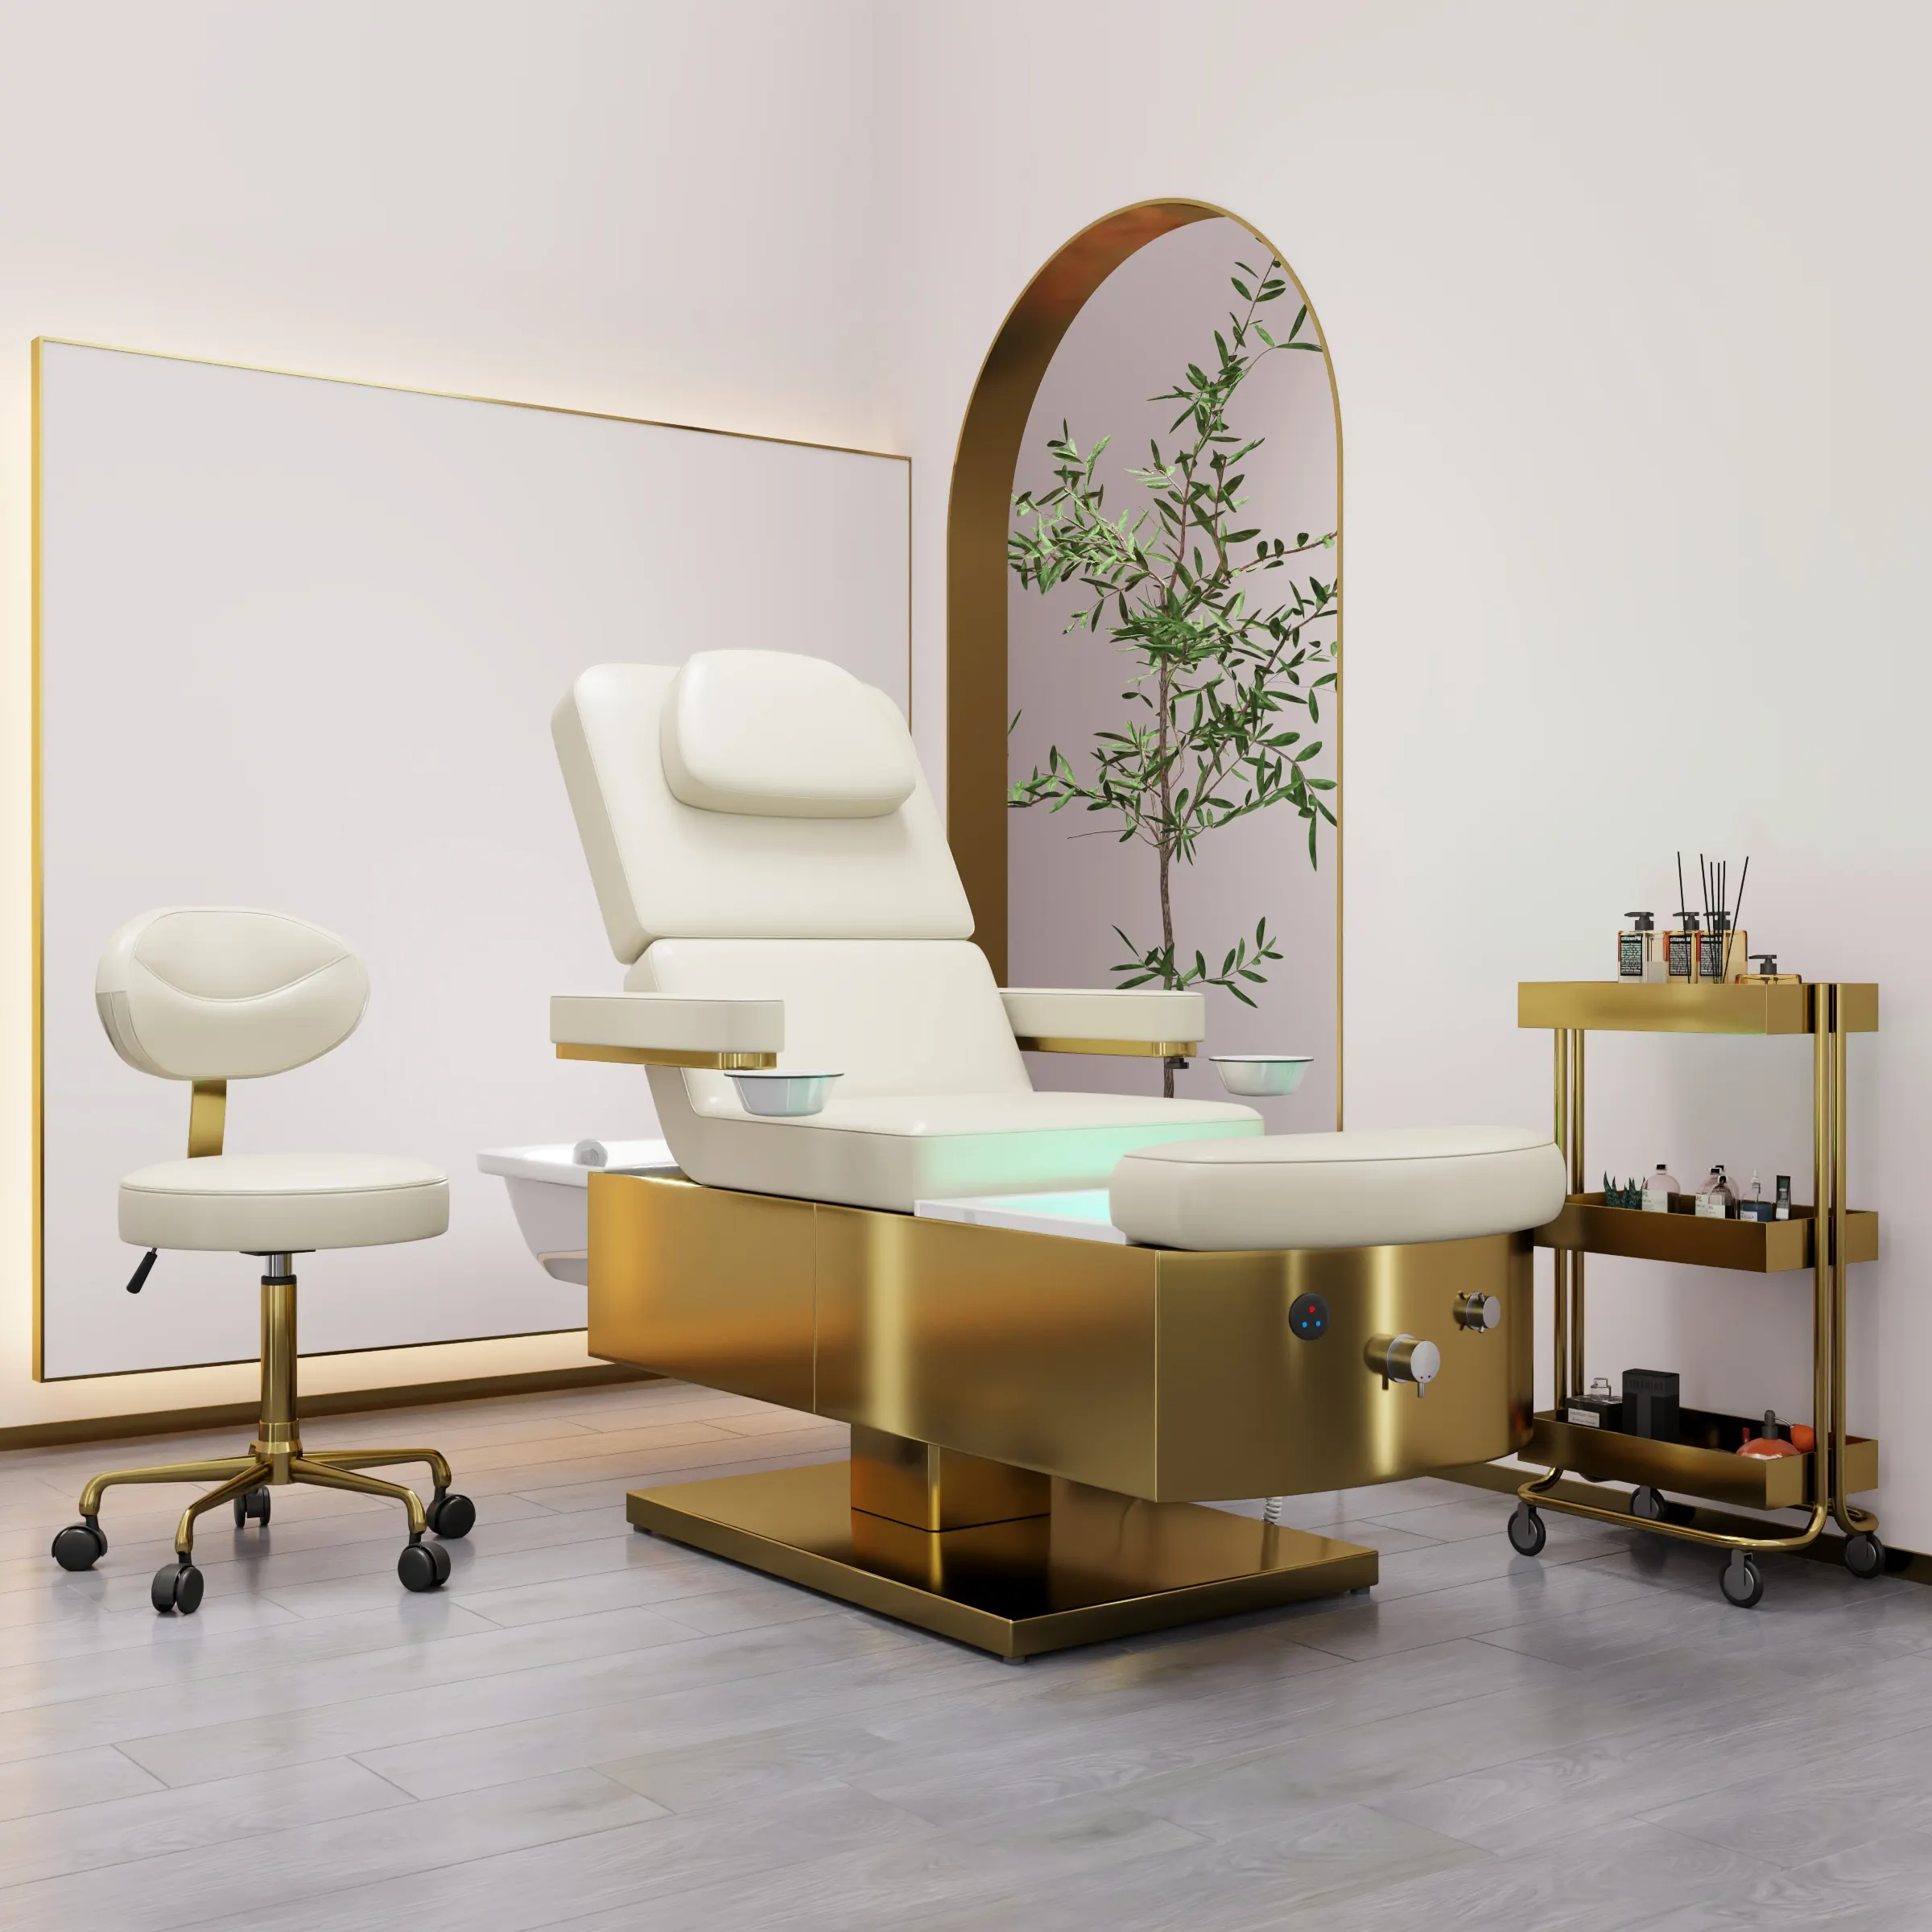 HOCHEY Salon spa water circulation Hair Washing Massage Chair Pedicure shampoo bed